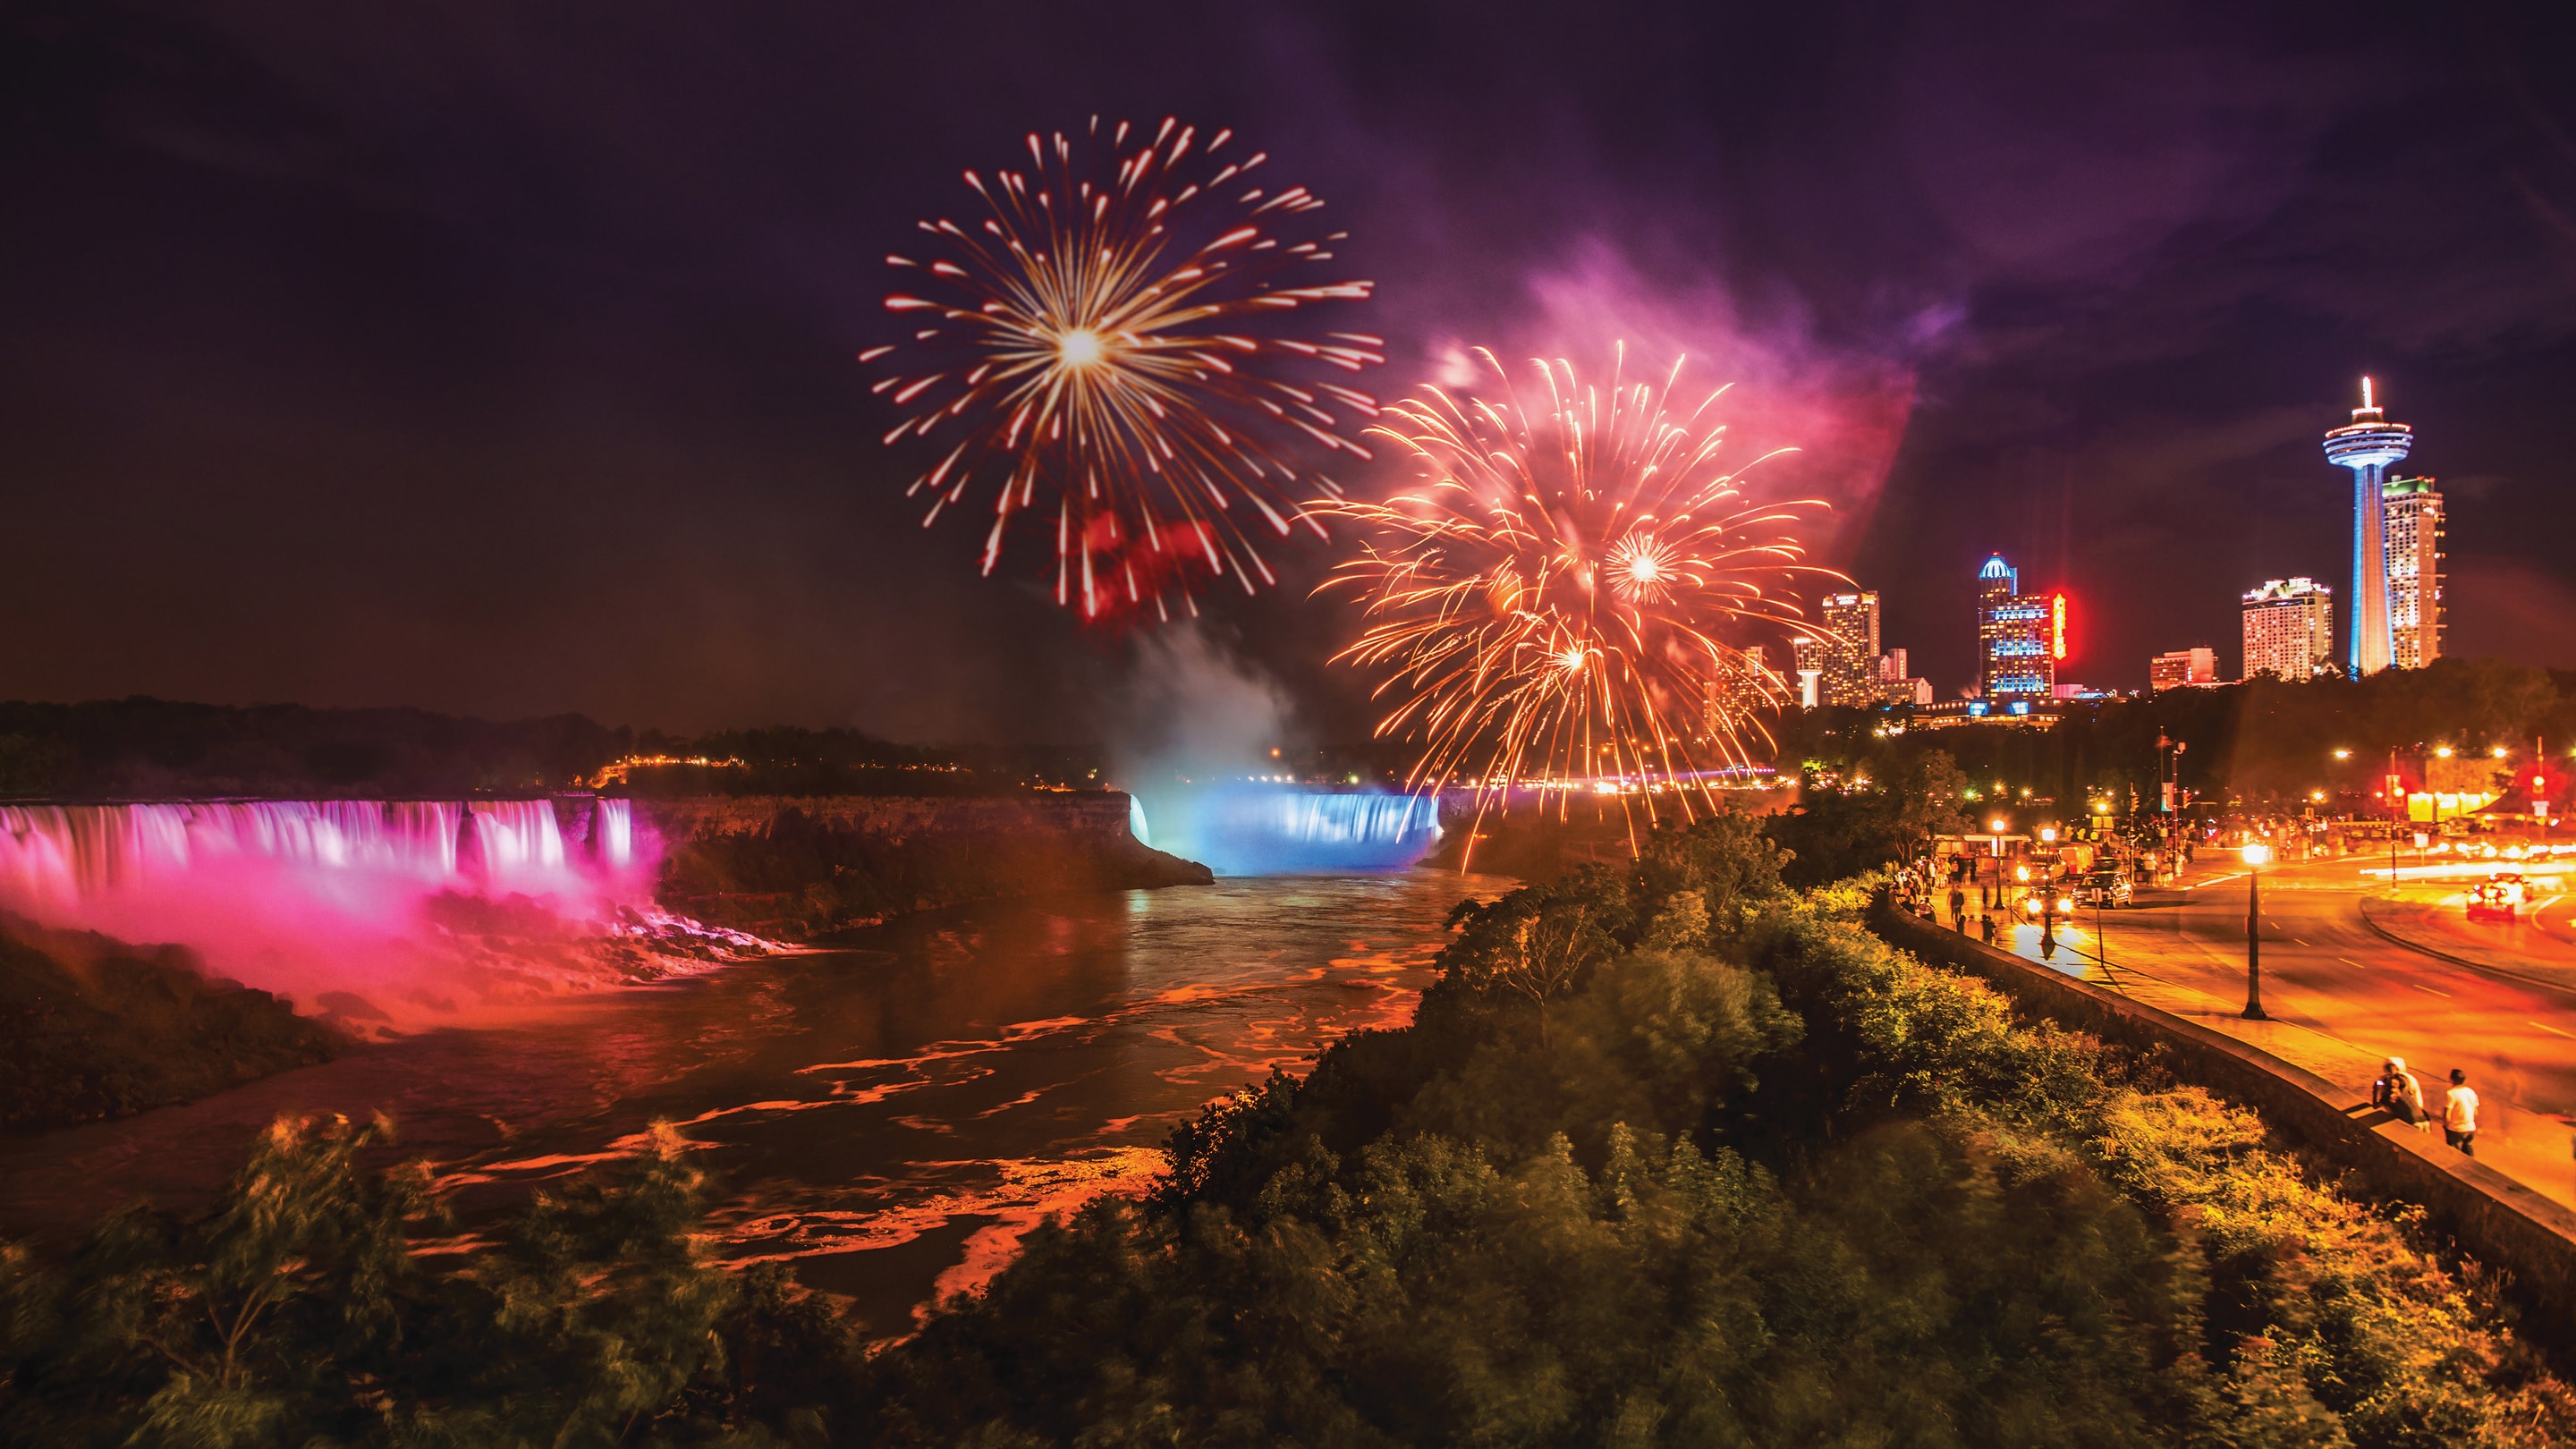 Fireworks lit up above Niagara falls